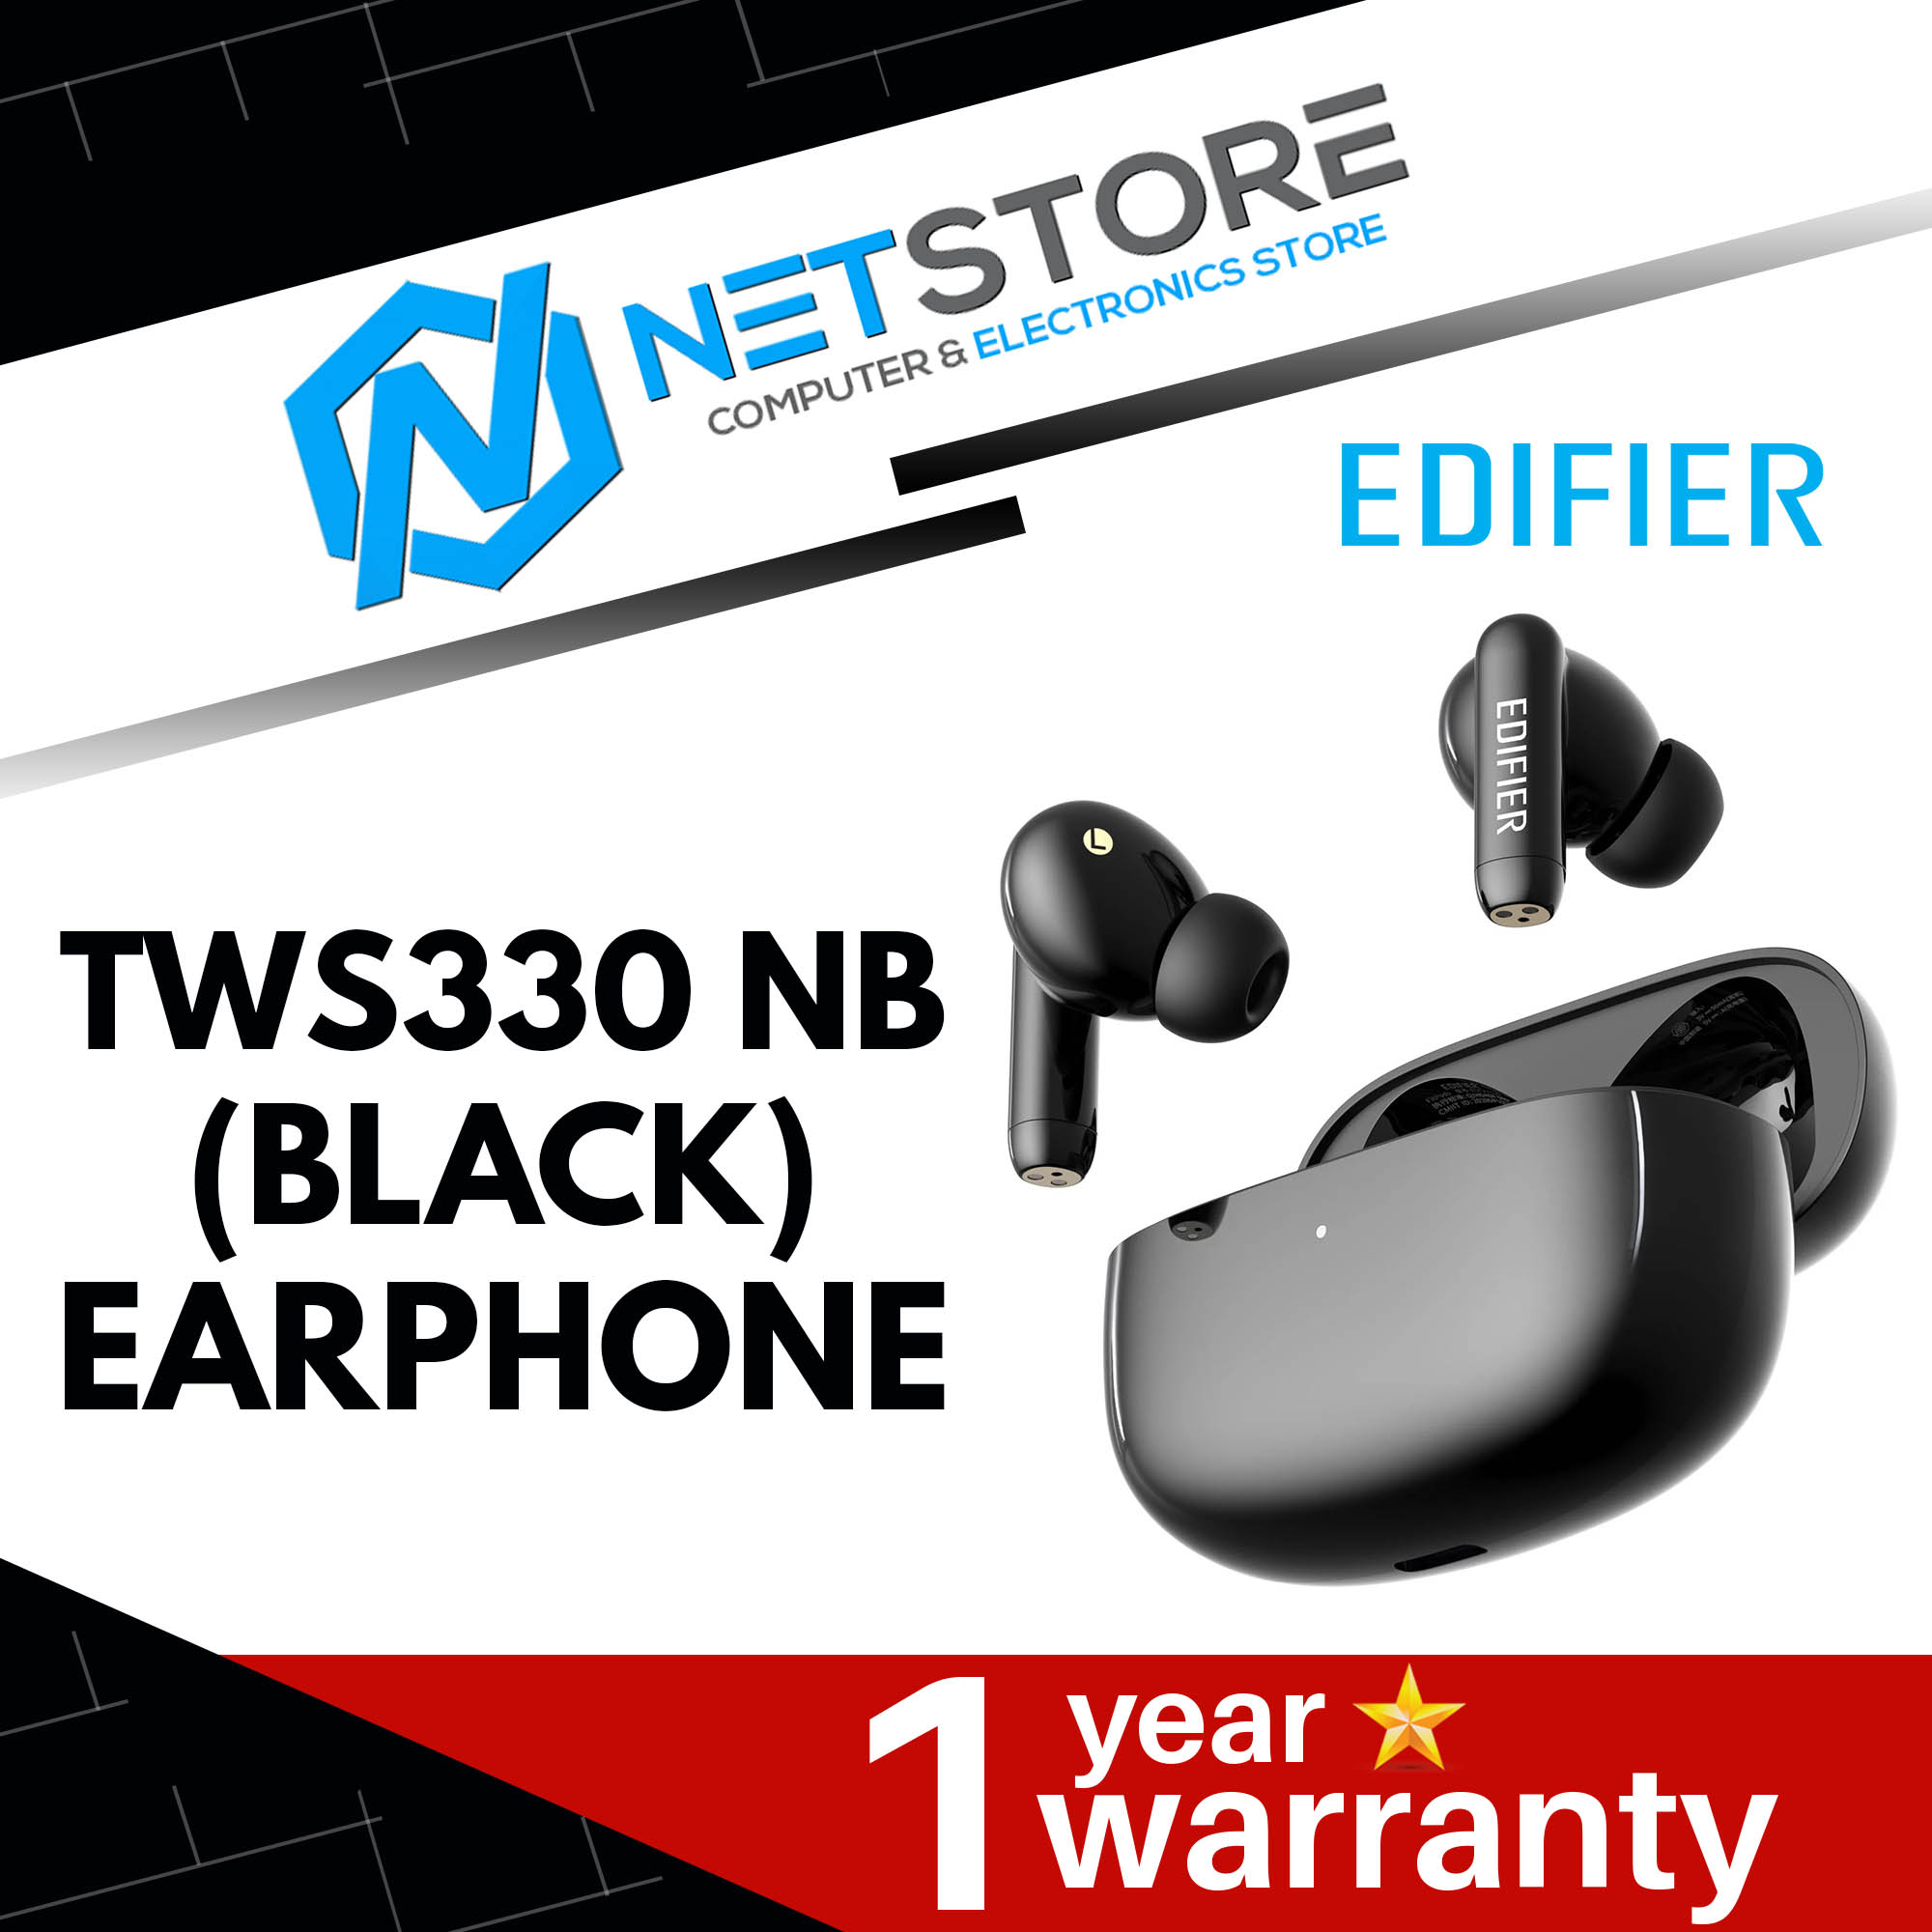 EDIFIER TWS330 NB (BLACK) EARHPONE - HP-TWS330 NB (B)